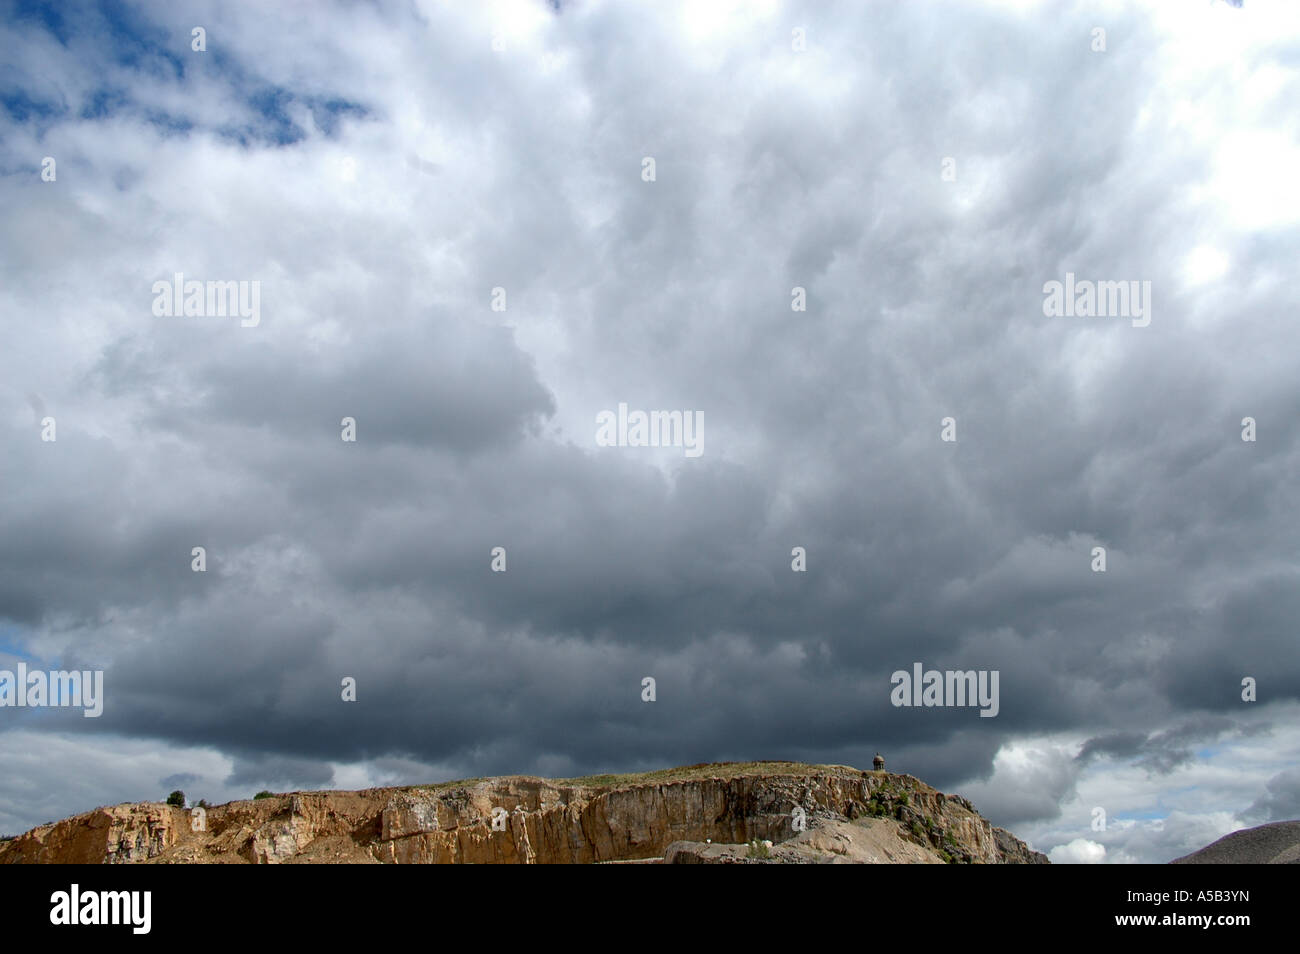 Threatening Cloud formation Stock Photo - Alamy